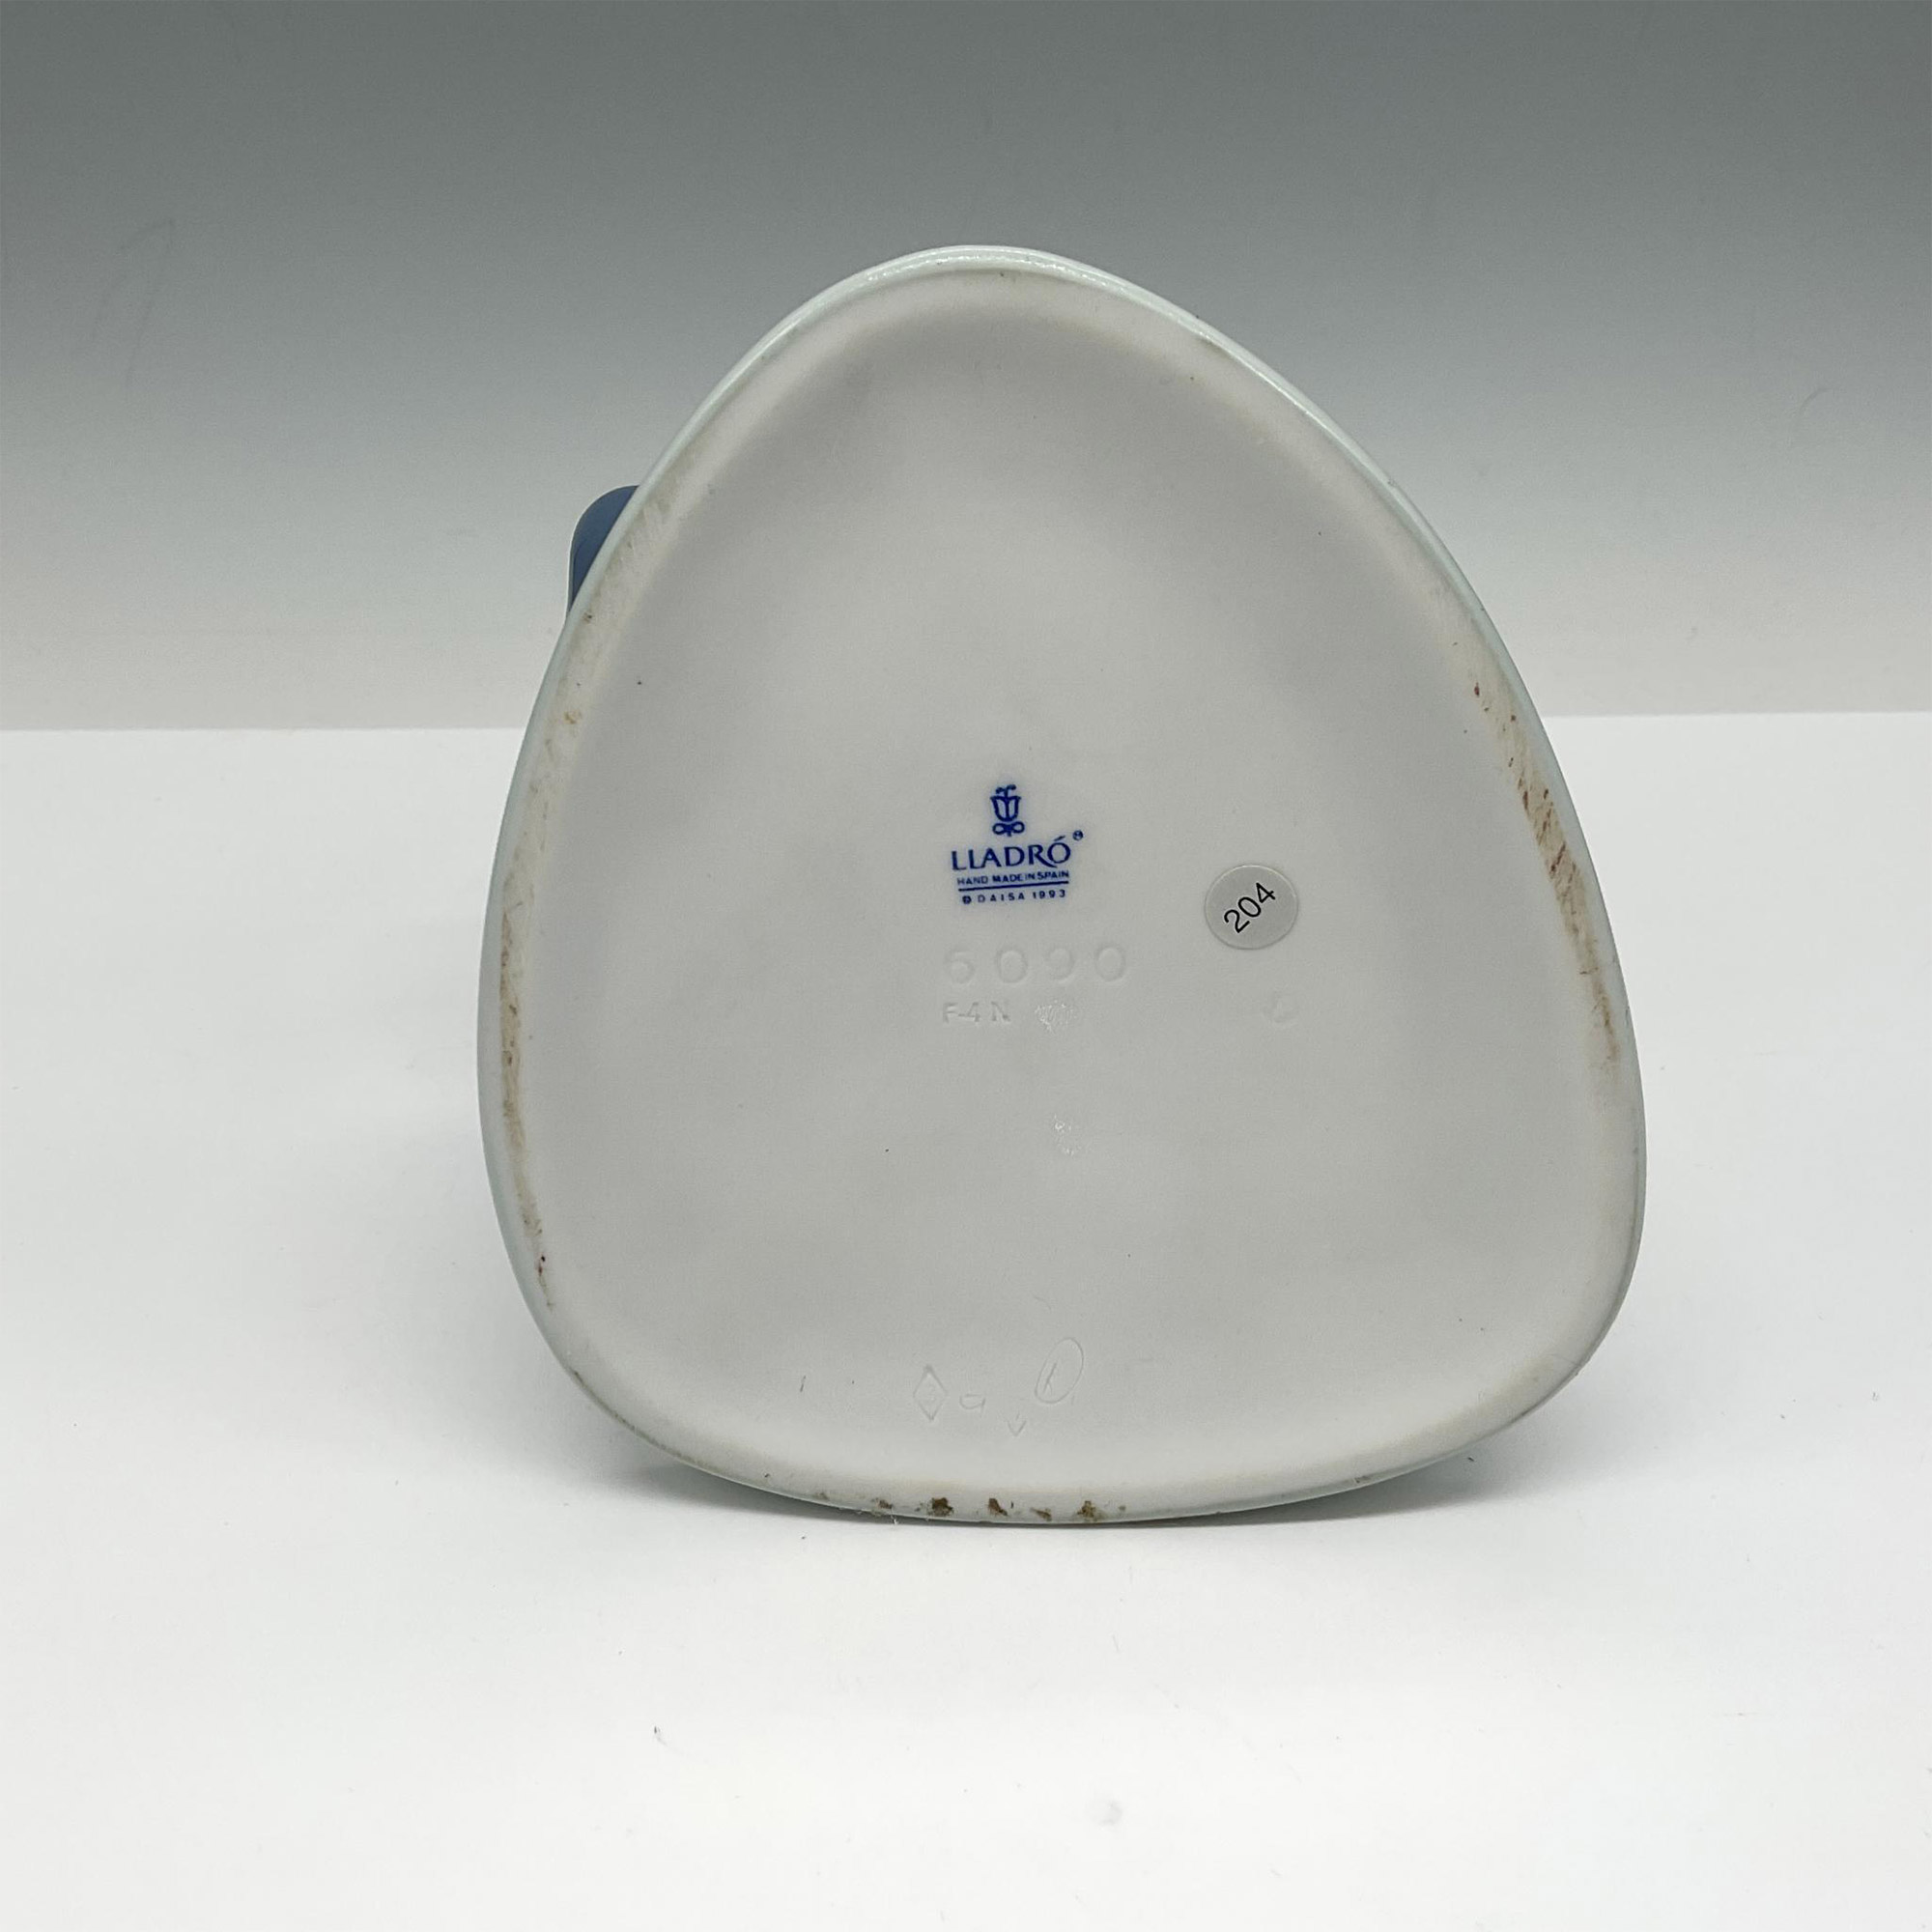 Baseball Player 1006090 - Lladro Porcelain Figurine - Image 4 of 4